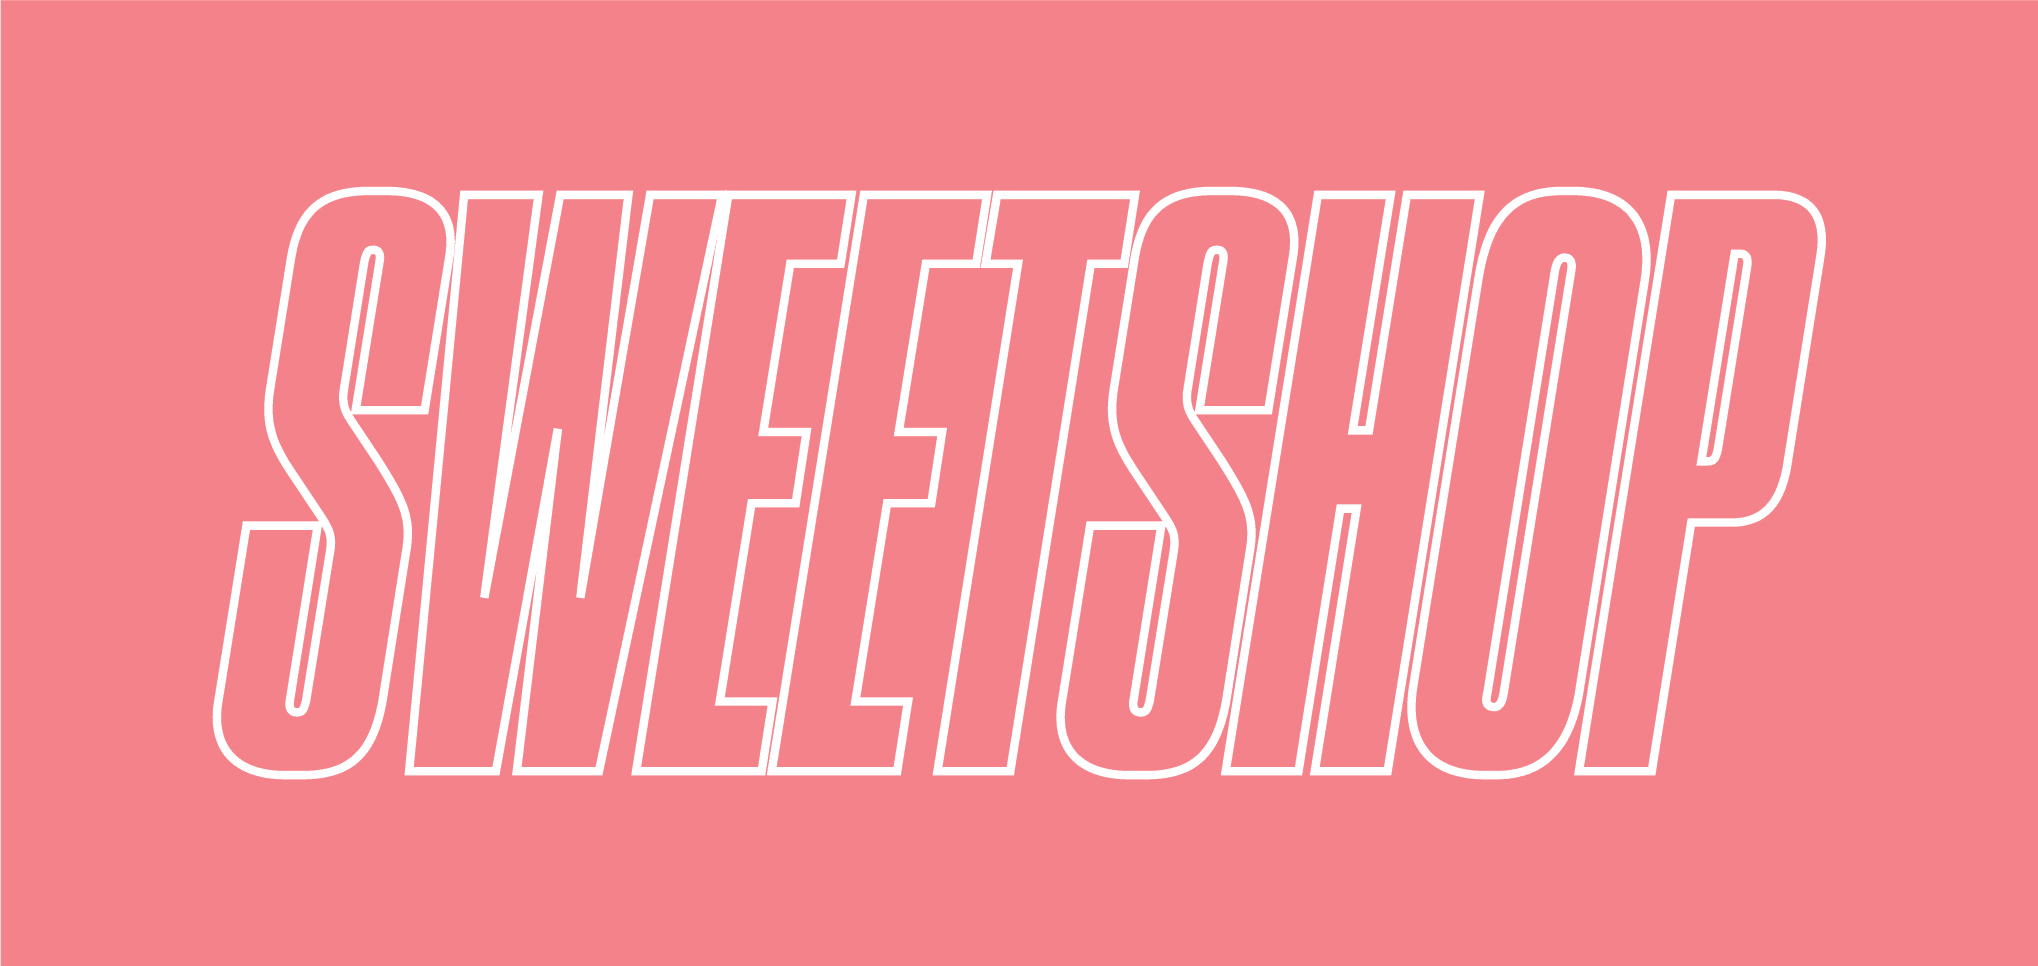 SweetshopMedia banner